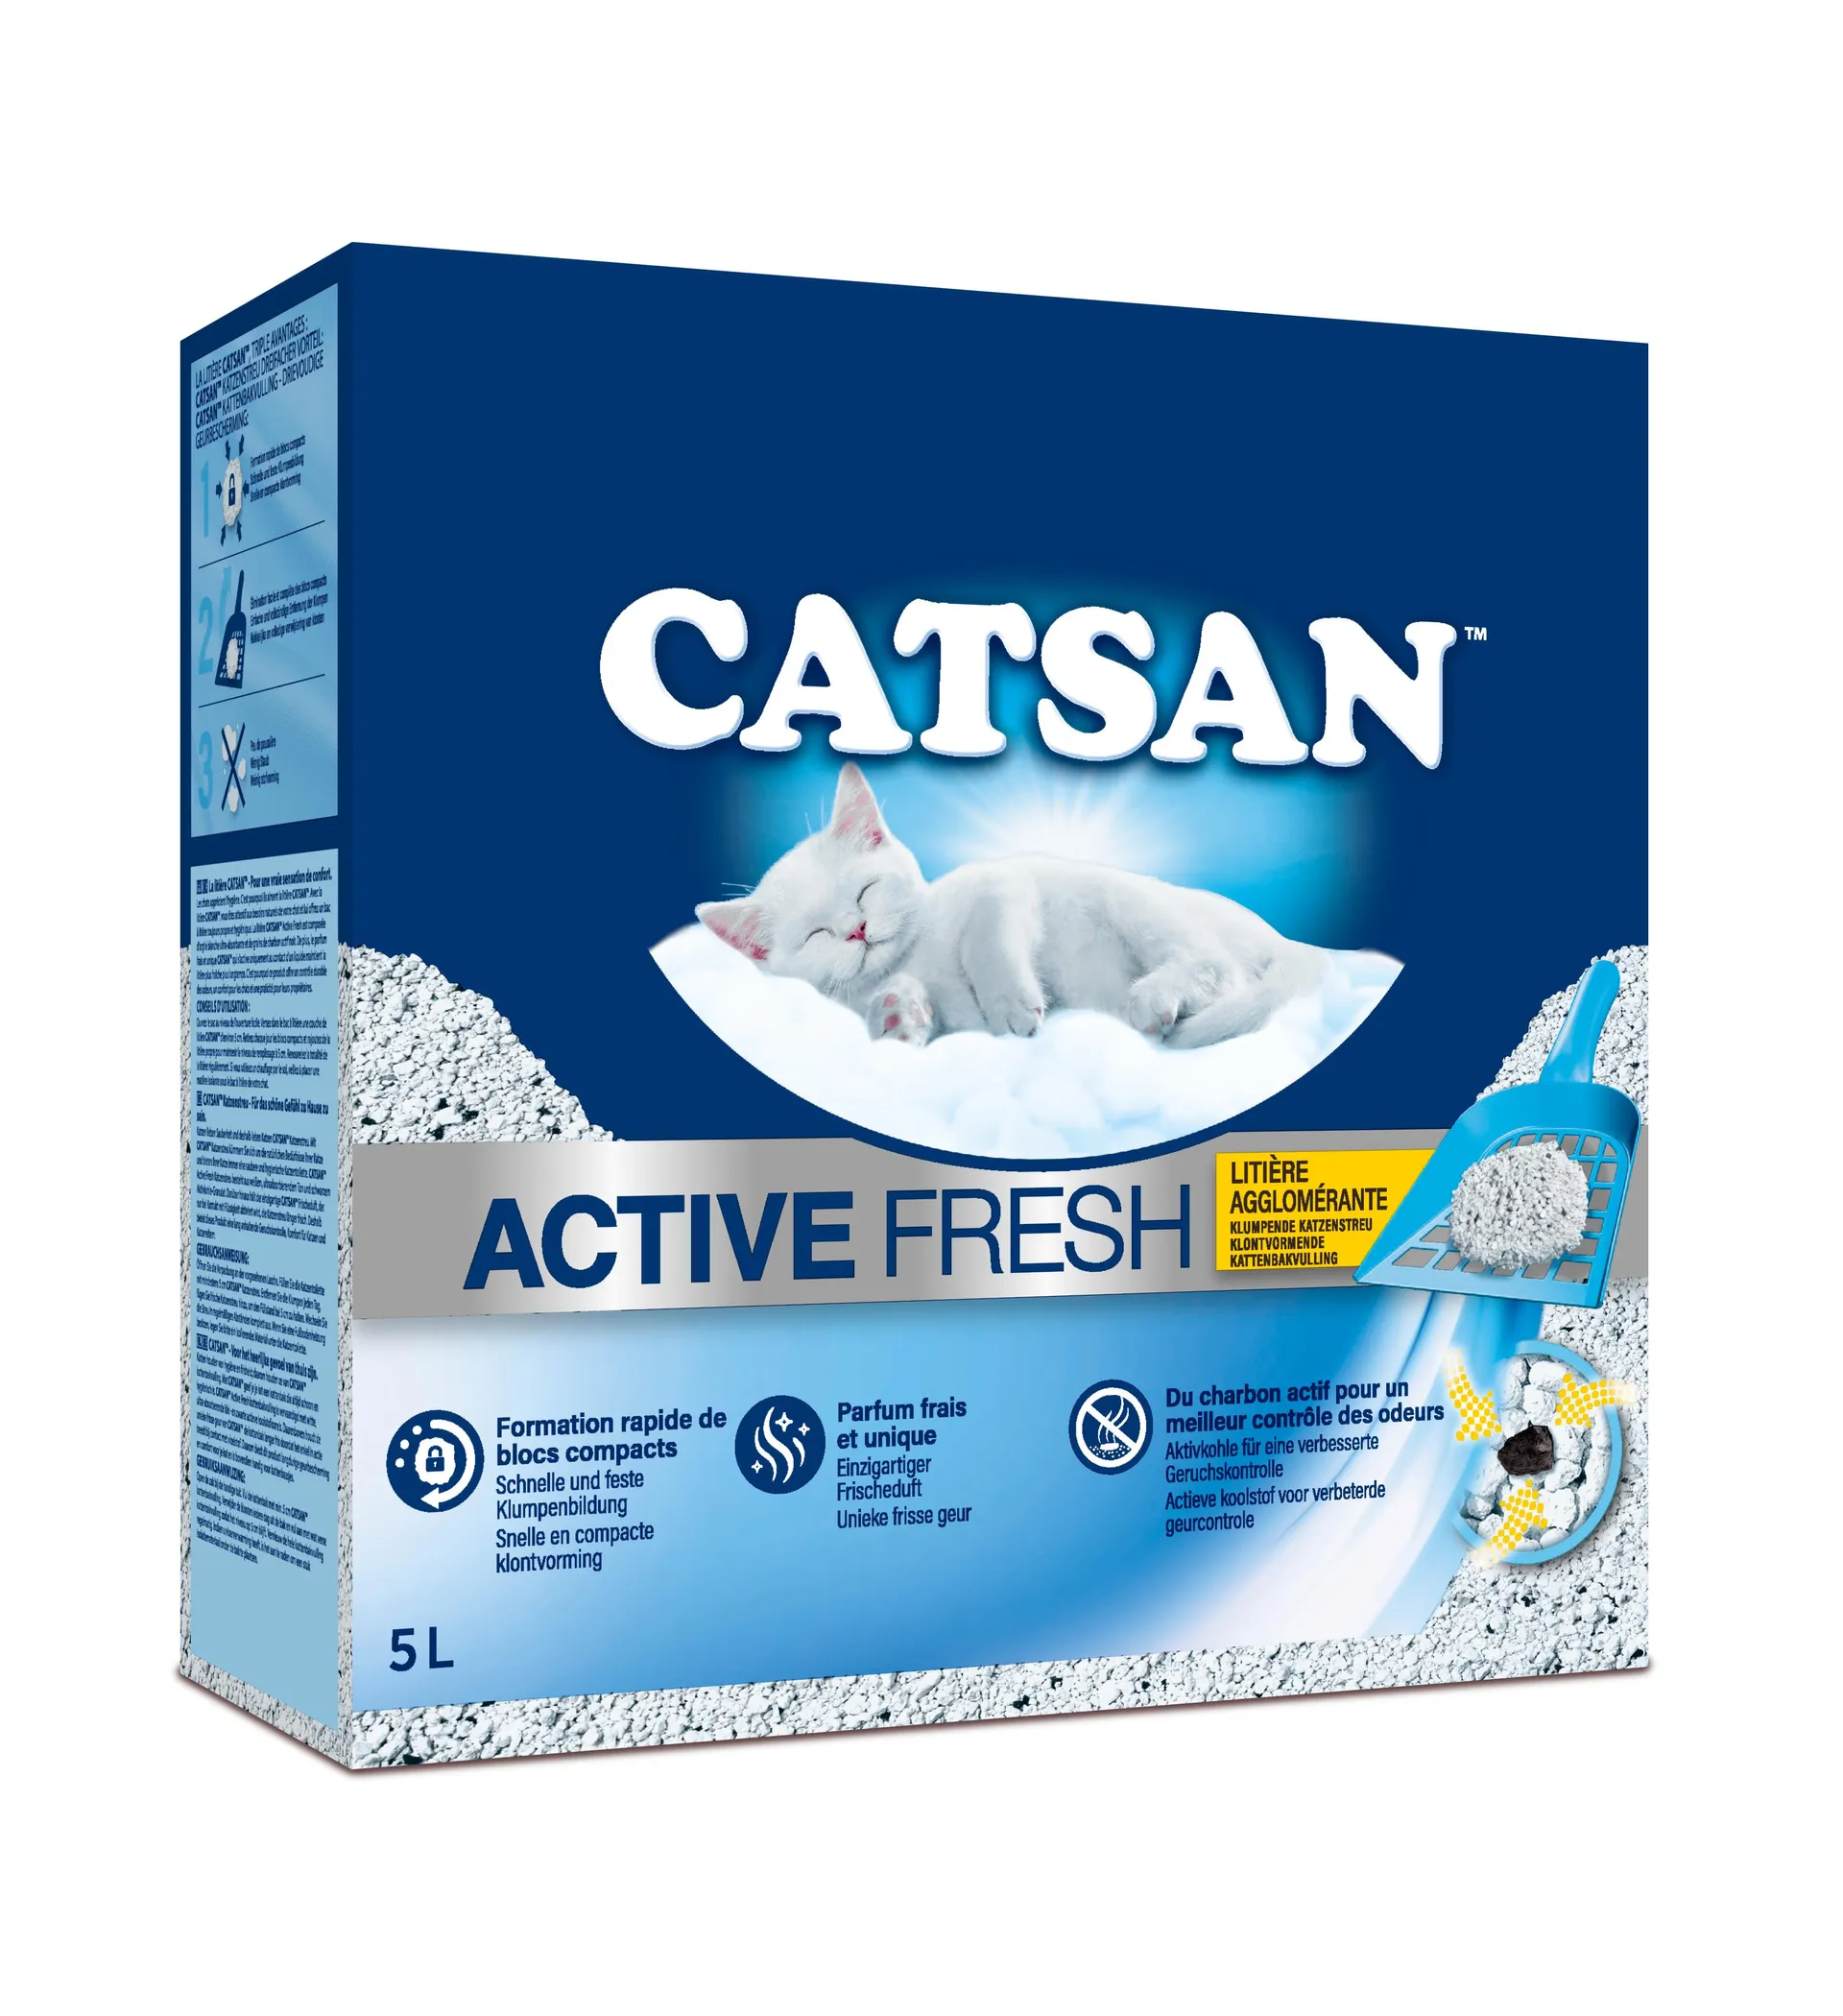 Catsan active fresh litière 5l